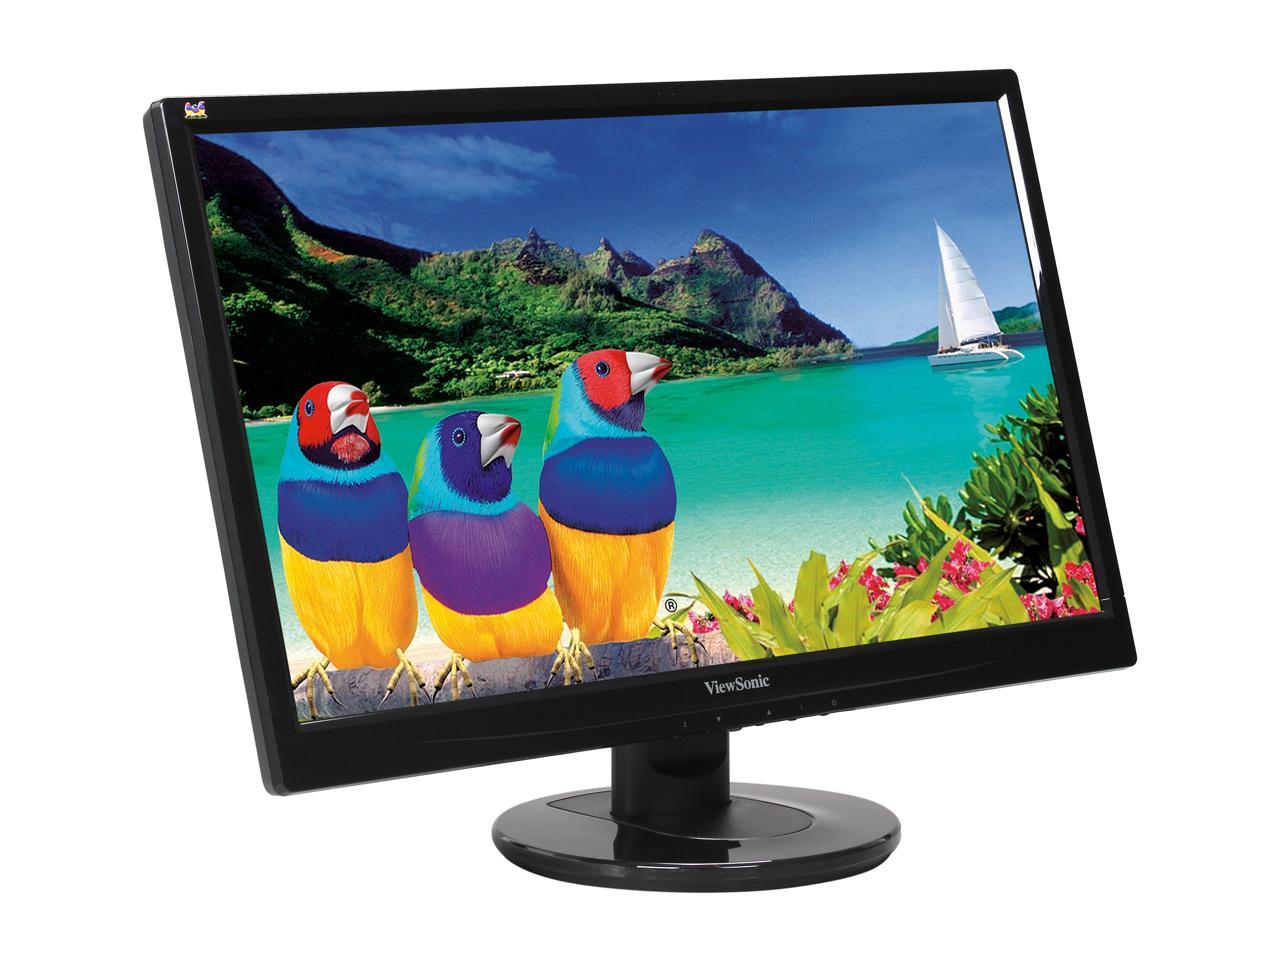 ViewSonic VA2246M-LED Black 21.5" 5ms Widescreen LED Backlight LCD 16:9 Full HD 1080P Monitor, 250 cd/m2 1000:1 (typ.) / 10,000,000:1 (Dynamic), DVI/D-Sub, Built-in Speakers, VESA Mountable